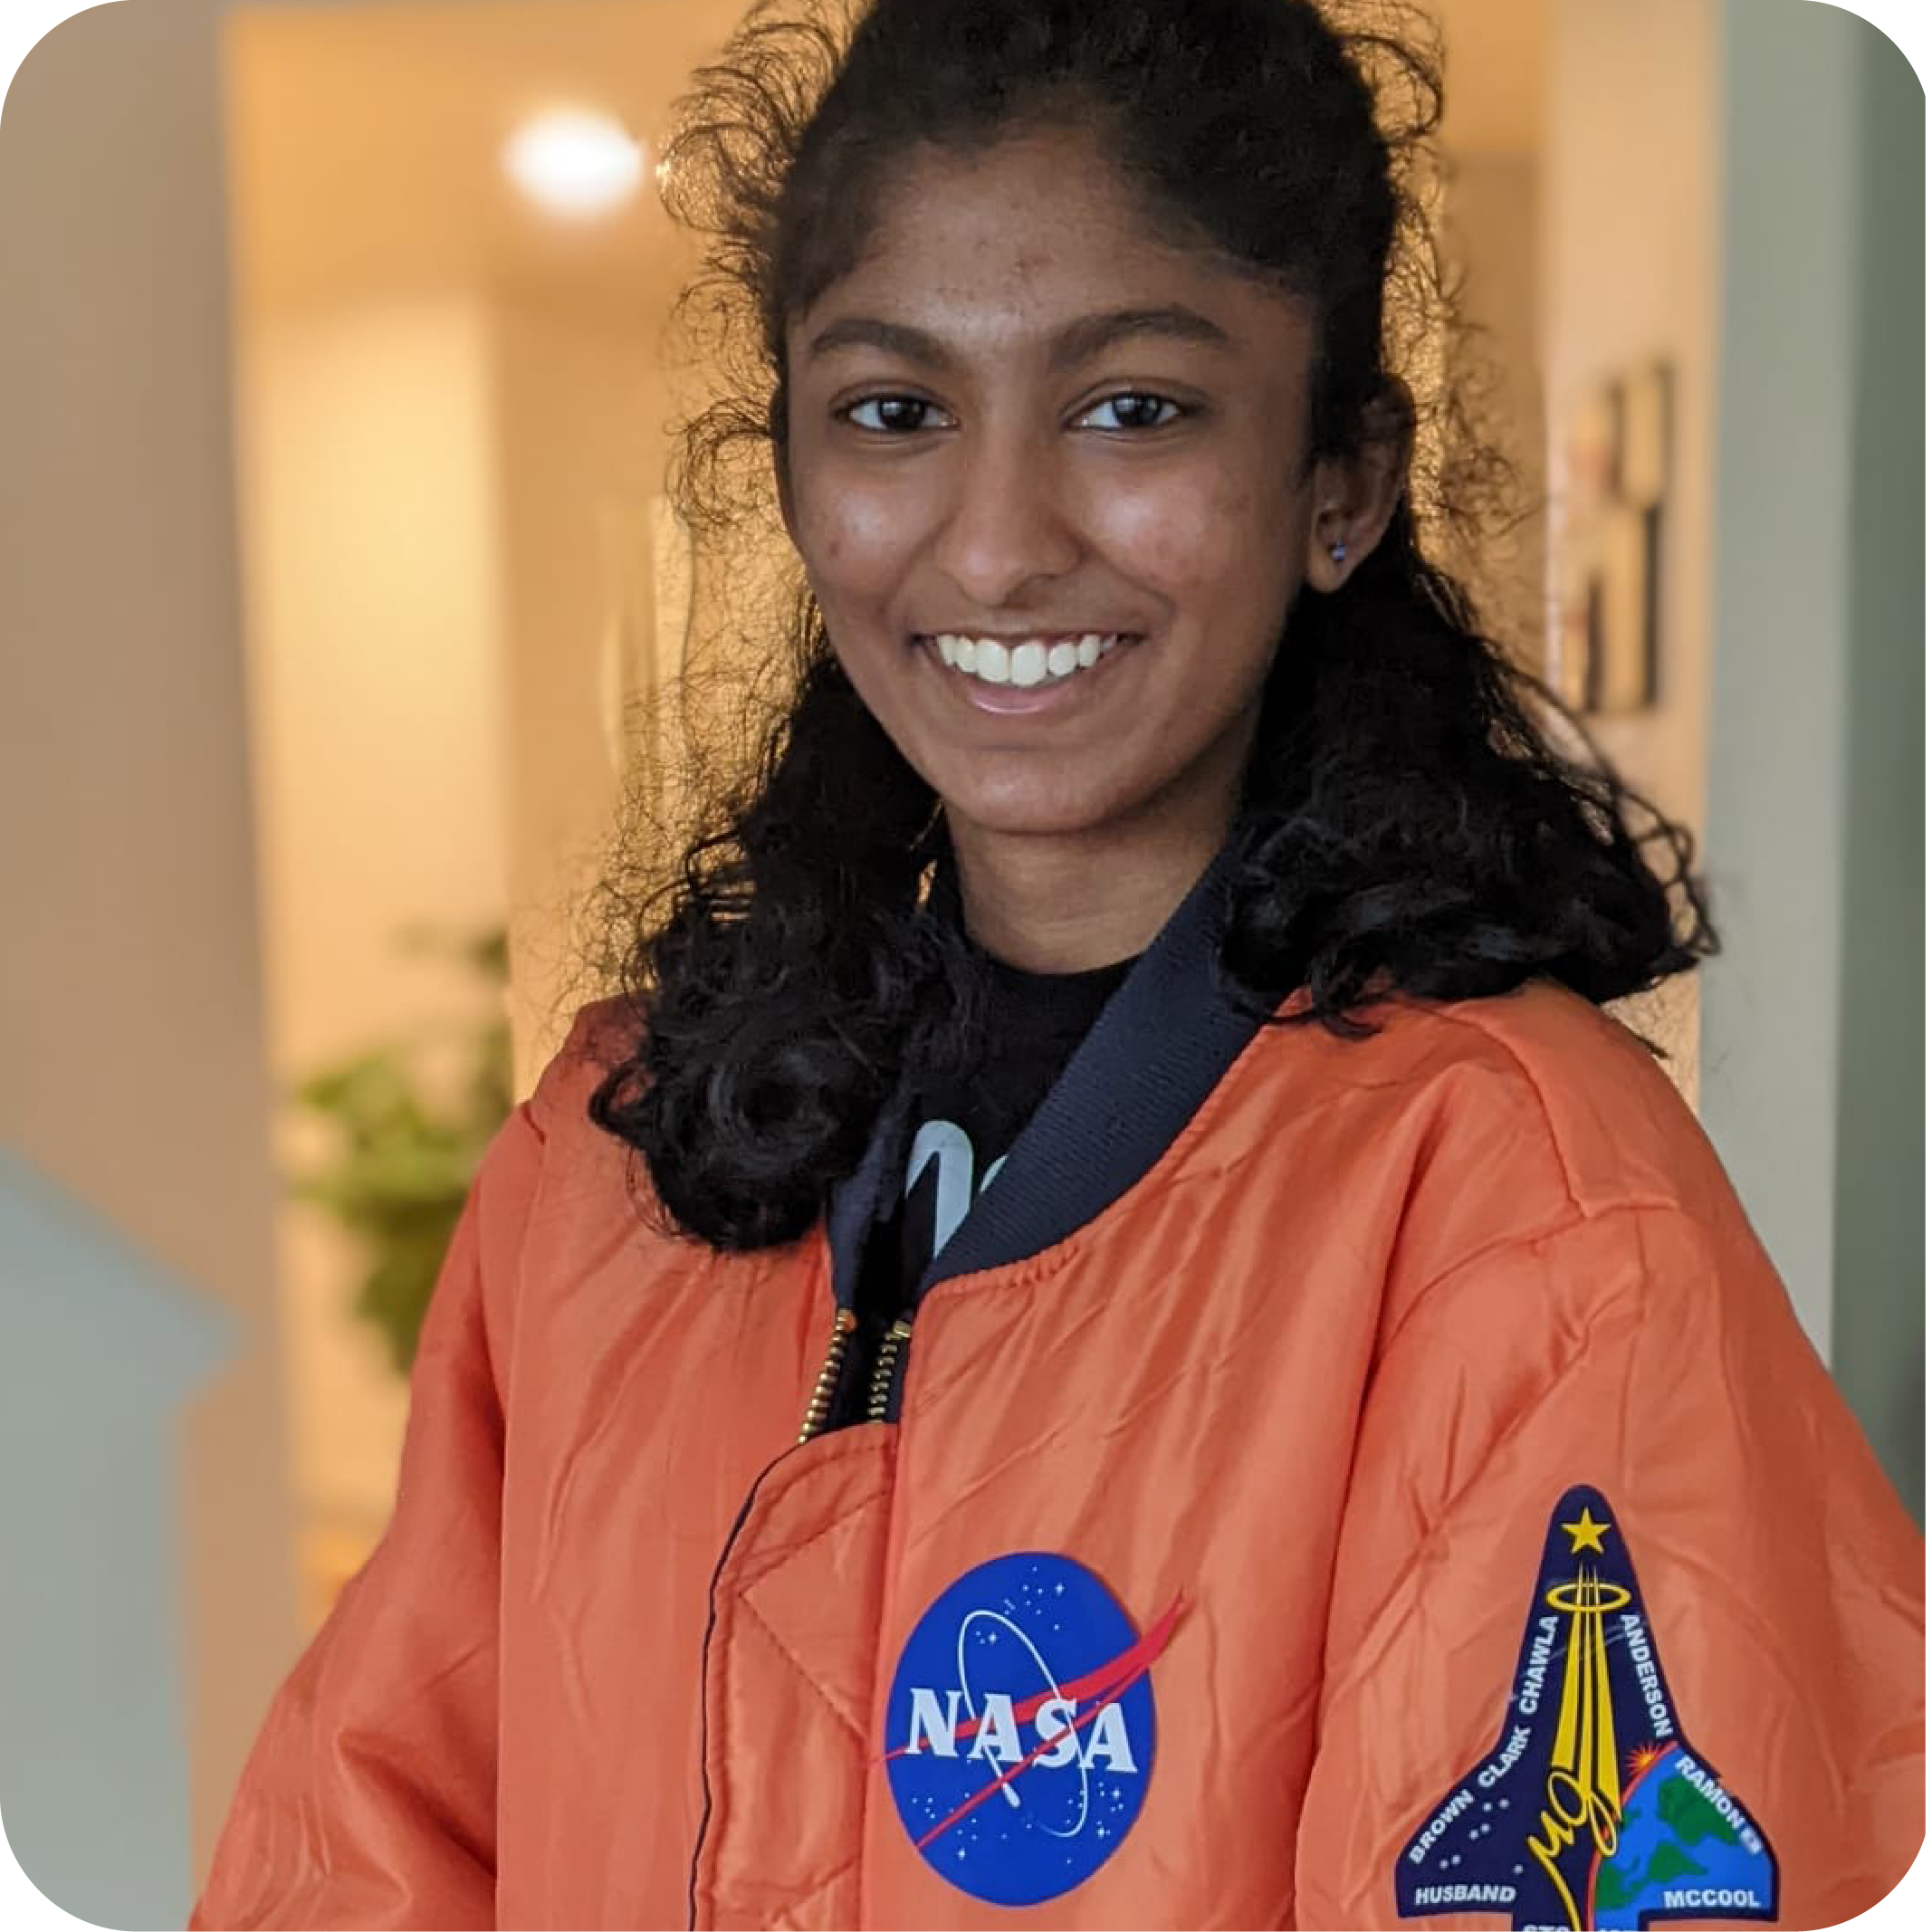 Girl Scout in orange NASA jacket